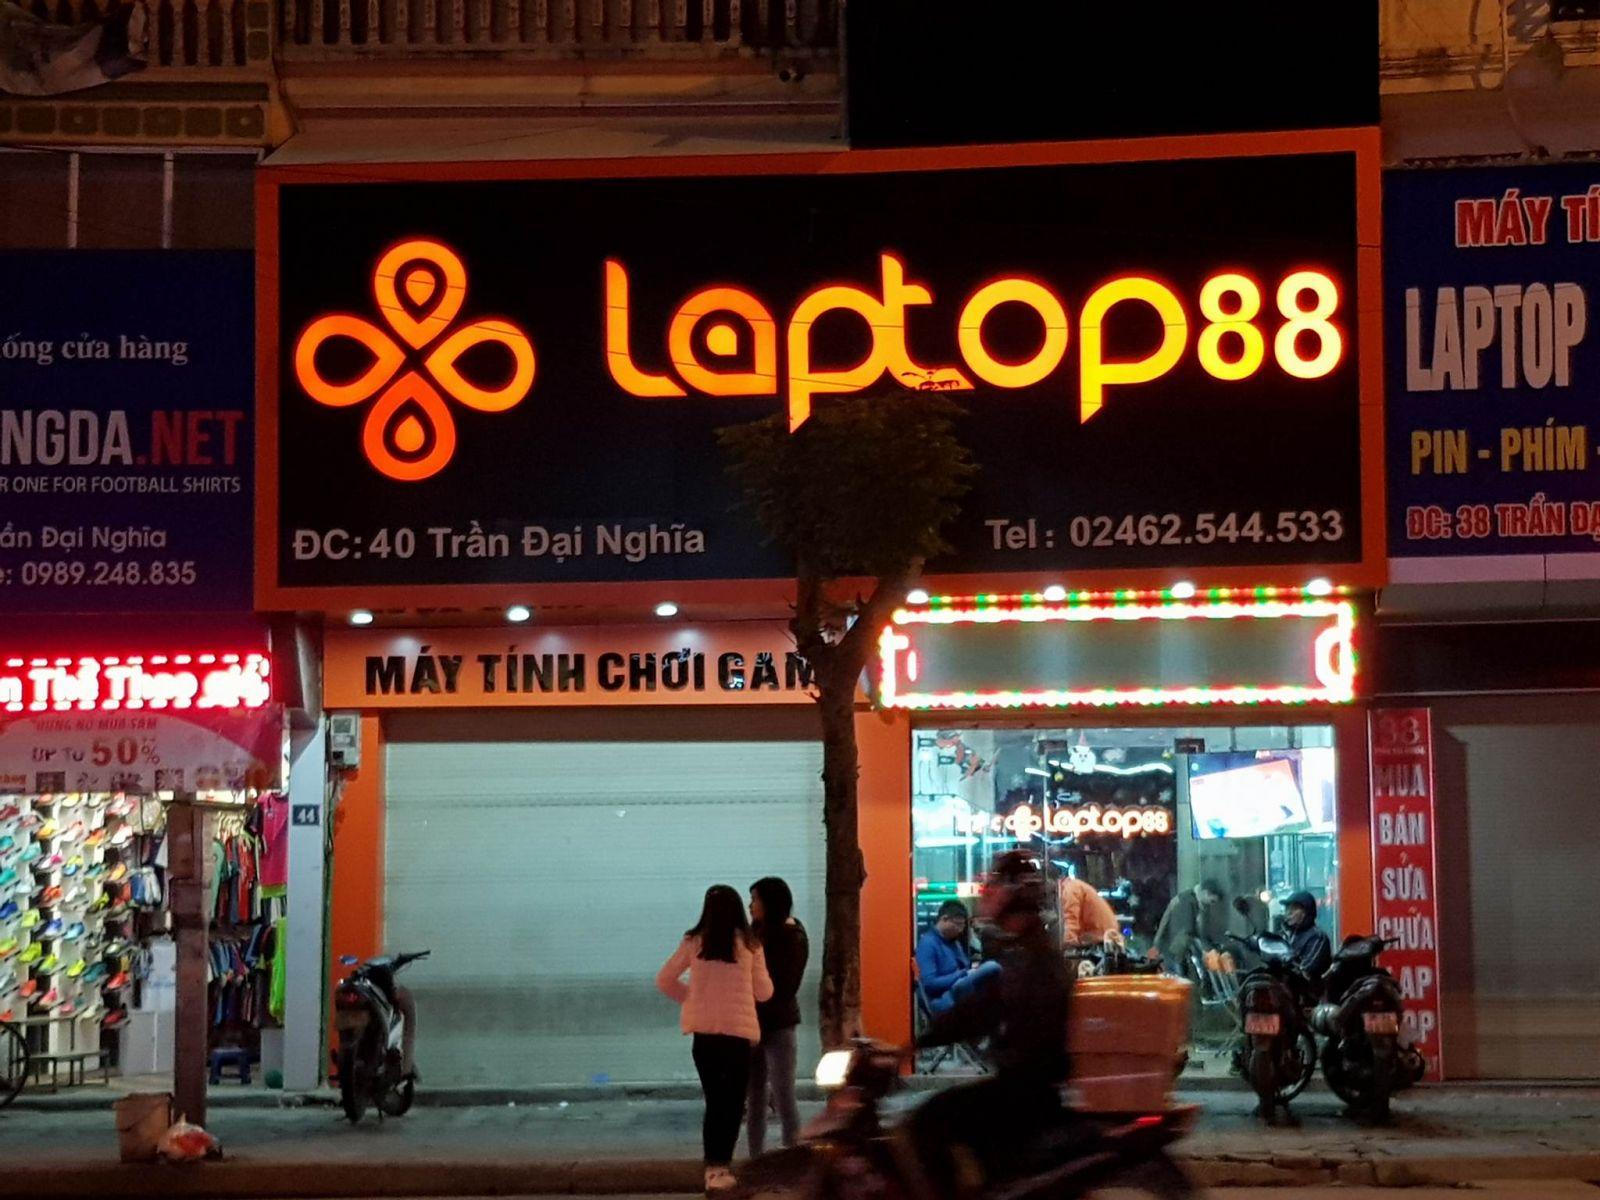 Laptop88